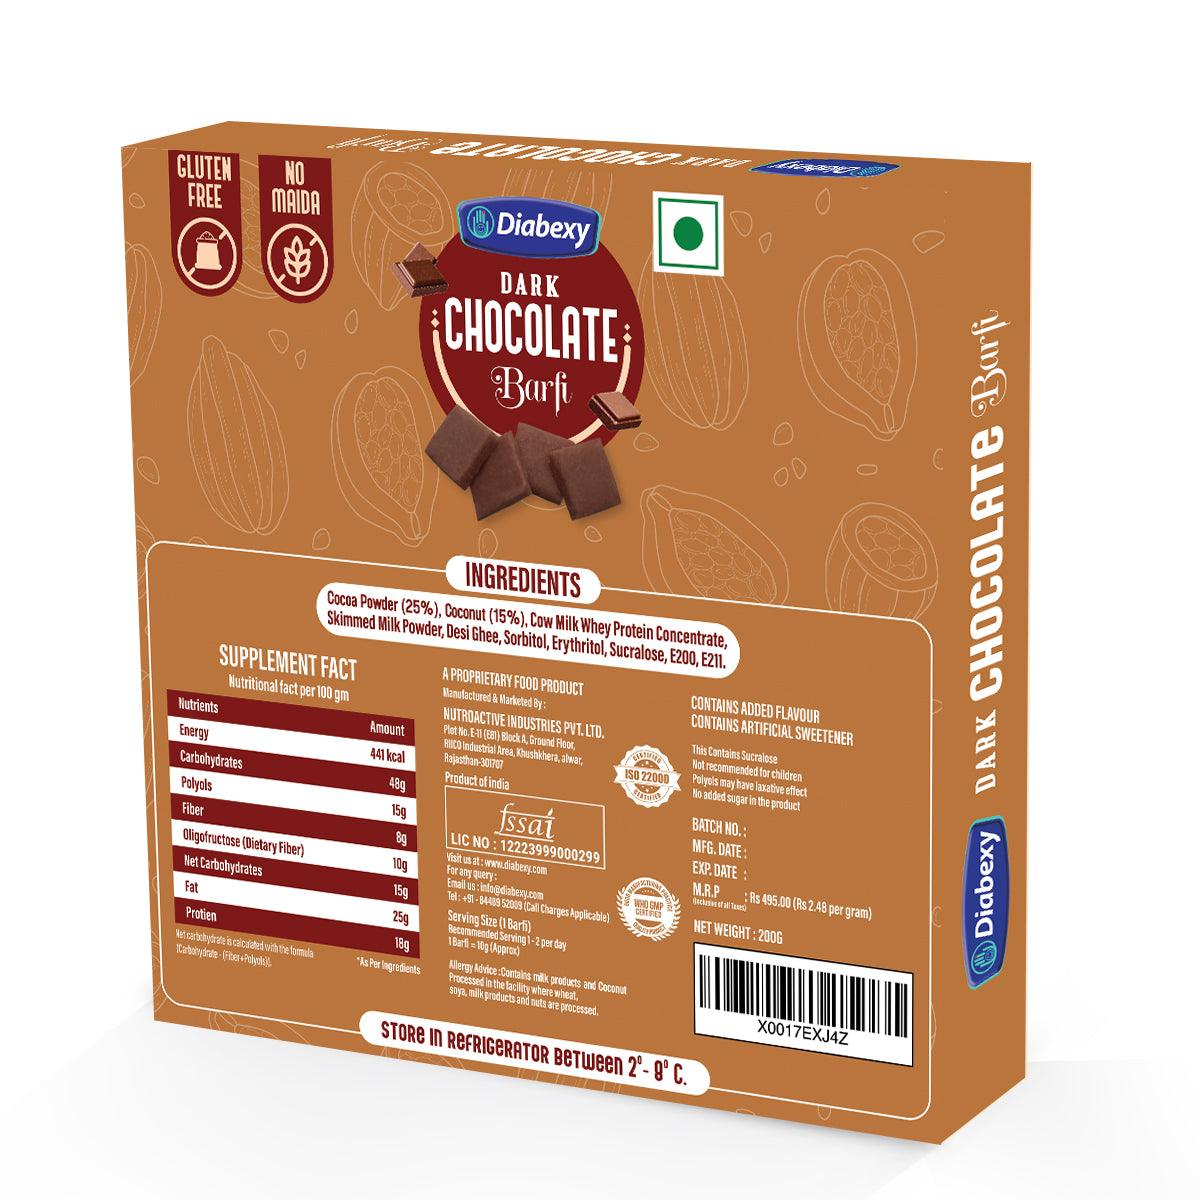 Diabexy Desi Ghee Dark Chocolate barfi Sugar Control for Diabetics- 200g - Diabexy